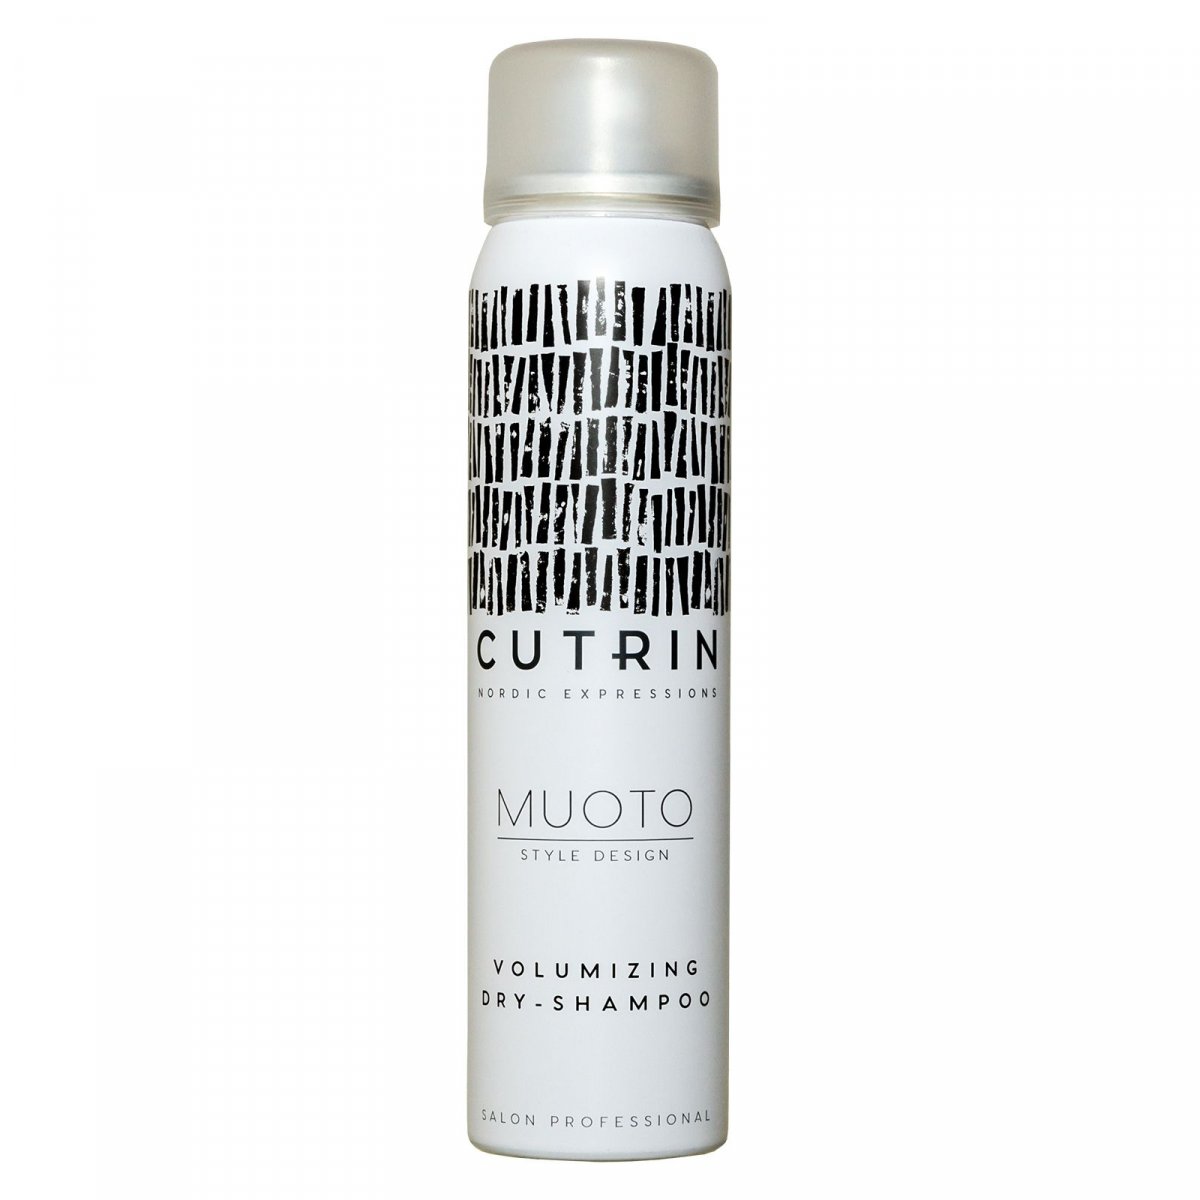 Cutrin Muoto Volumizing Dry Shampoo - Сухой шампунь для объема 100 мл Cutrin (Финляндия) купить по цене 671 руб.